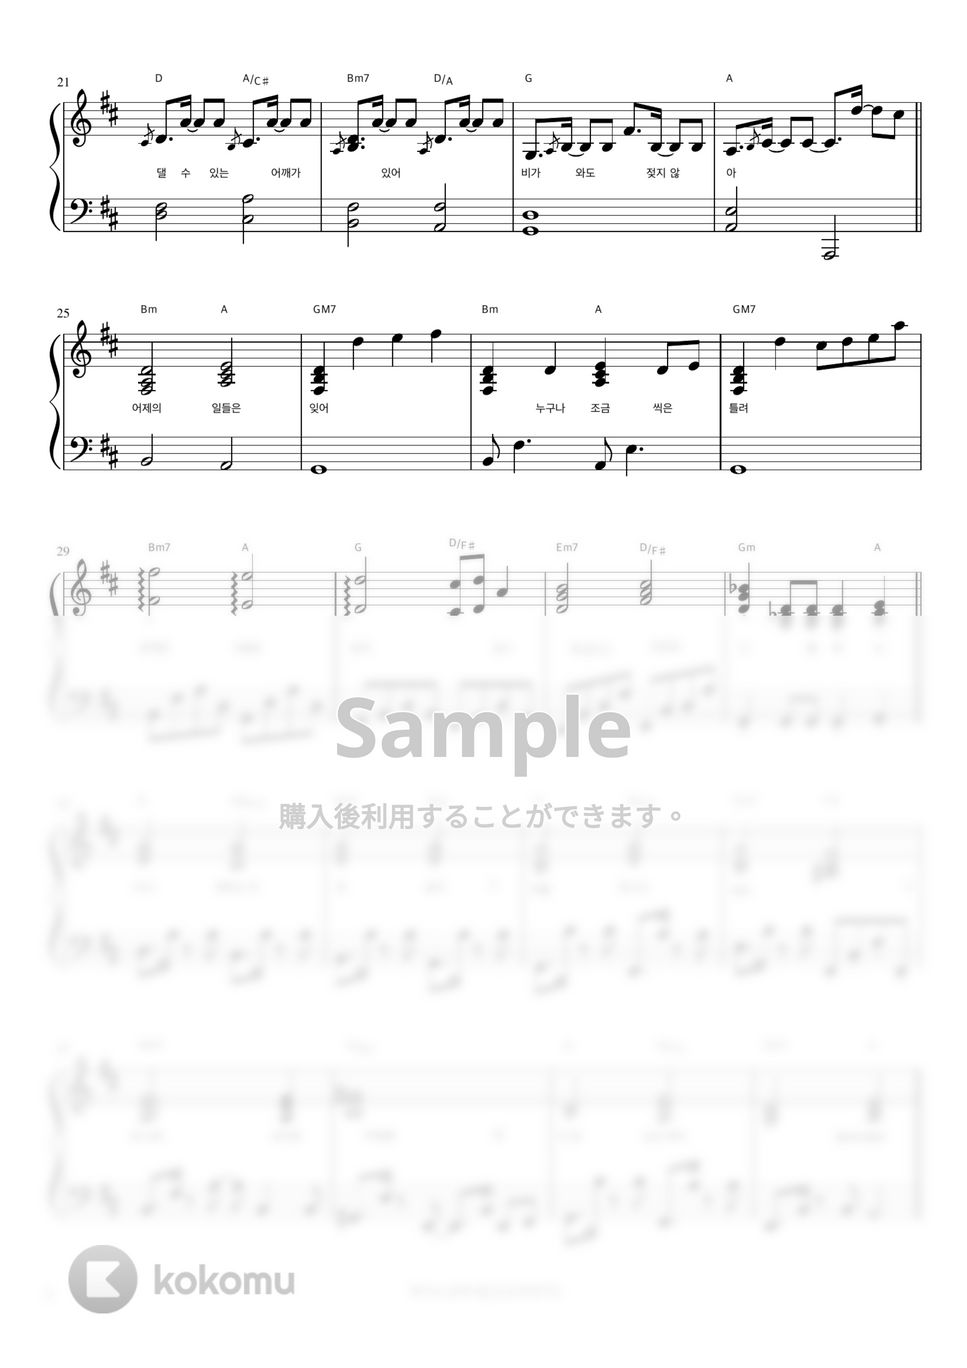 IU - Secret Garden (伴奏楽譜) by 피아노정류장